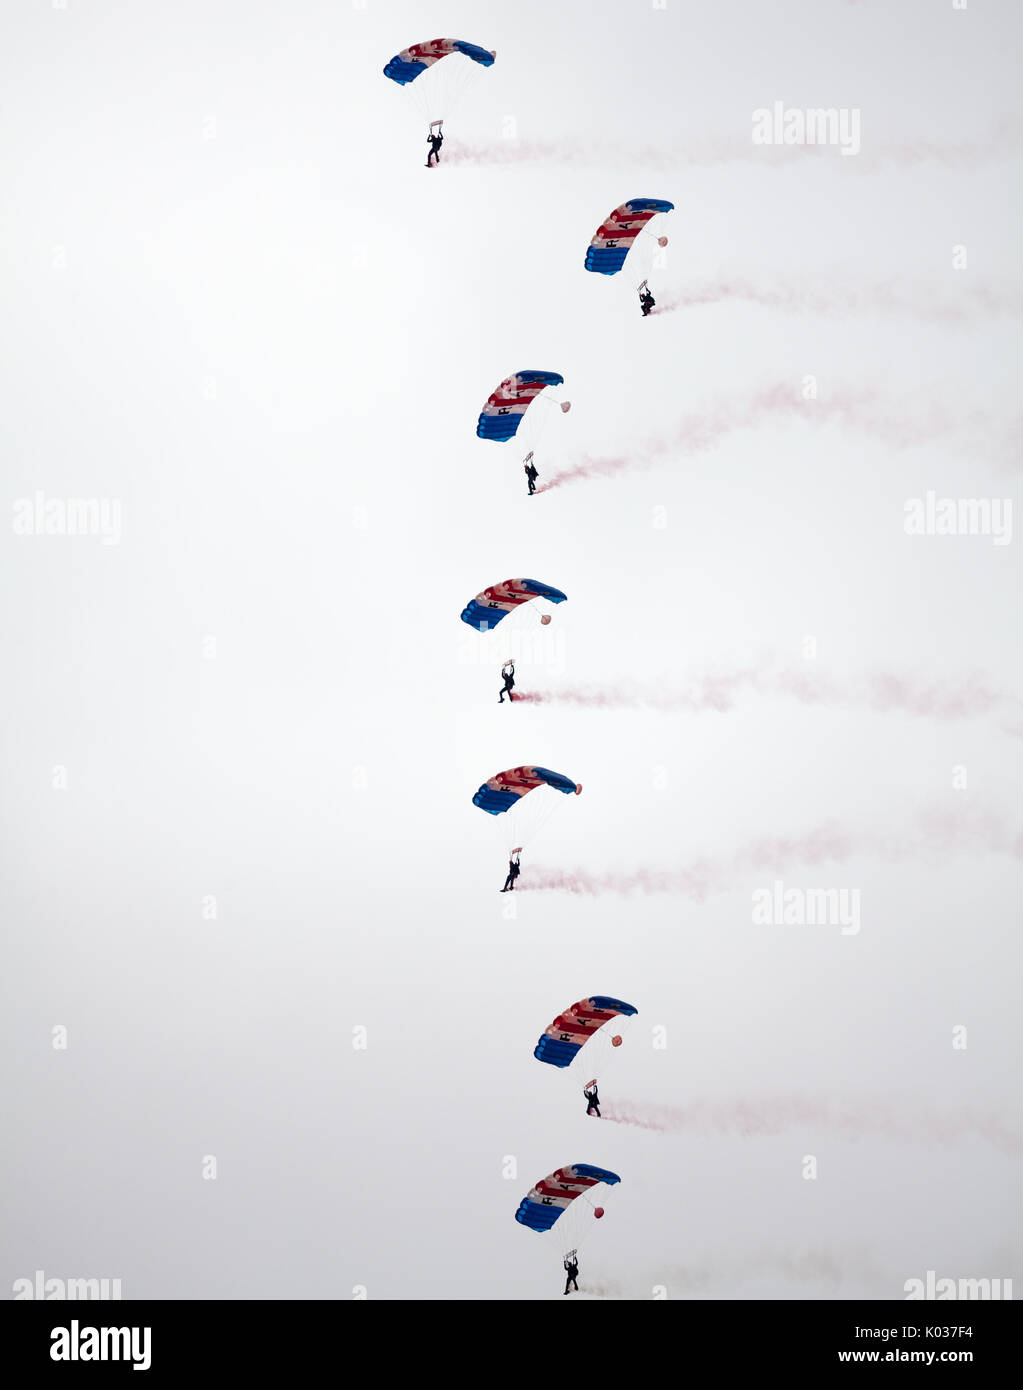 RAF Falcon parachute display team Stock Photo